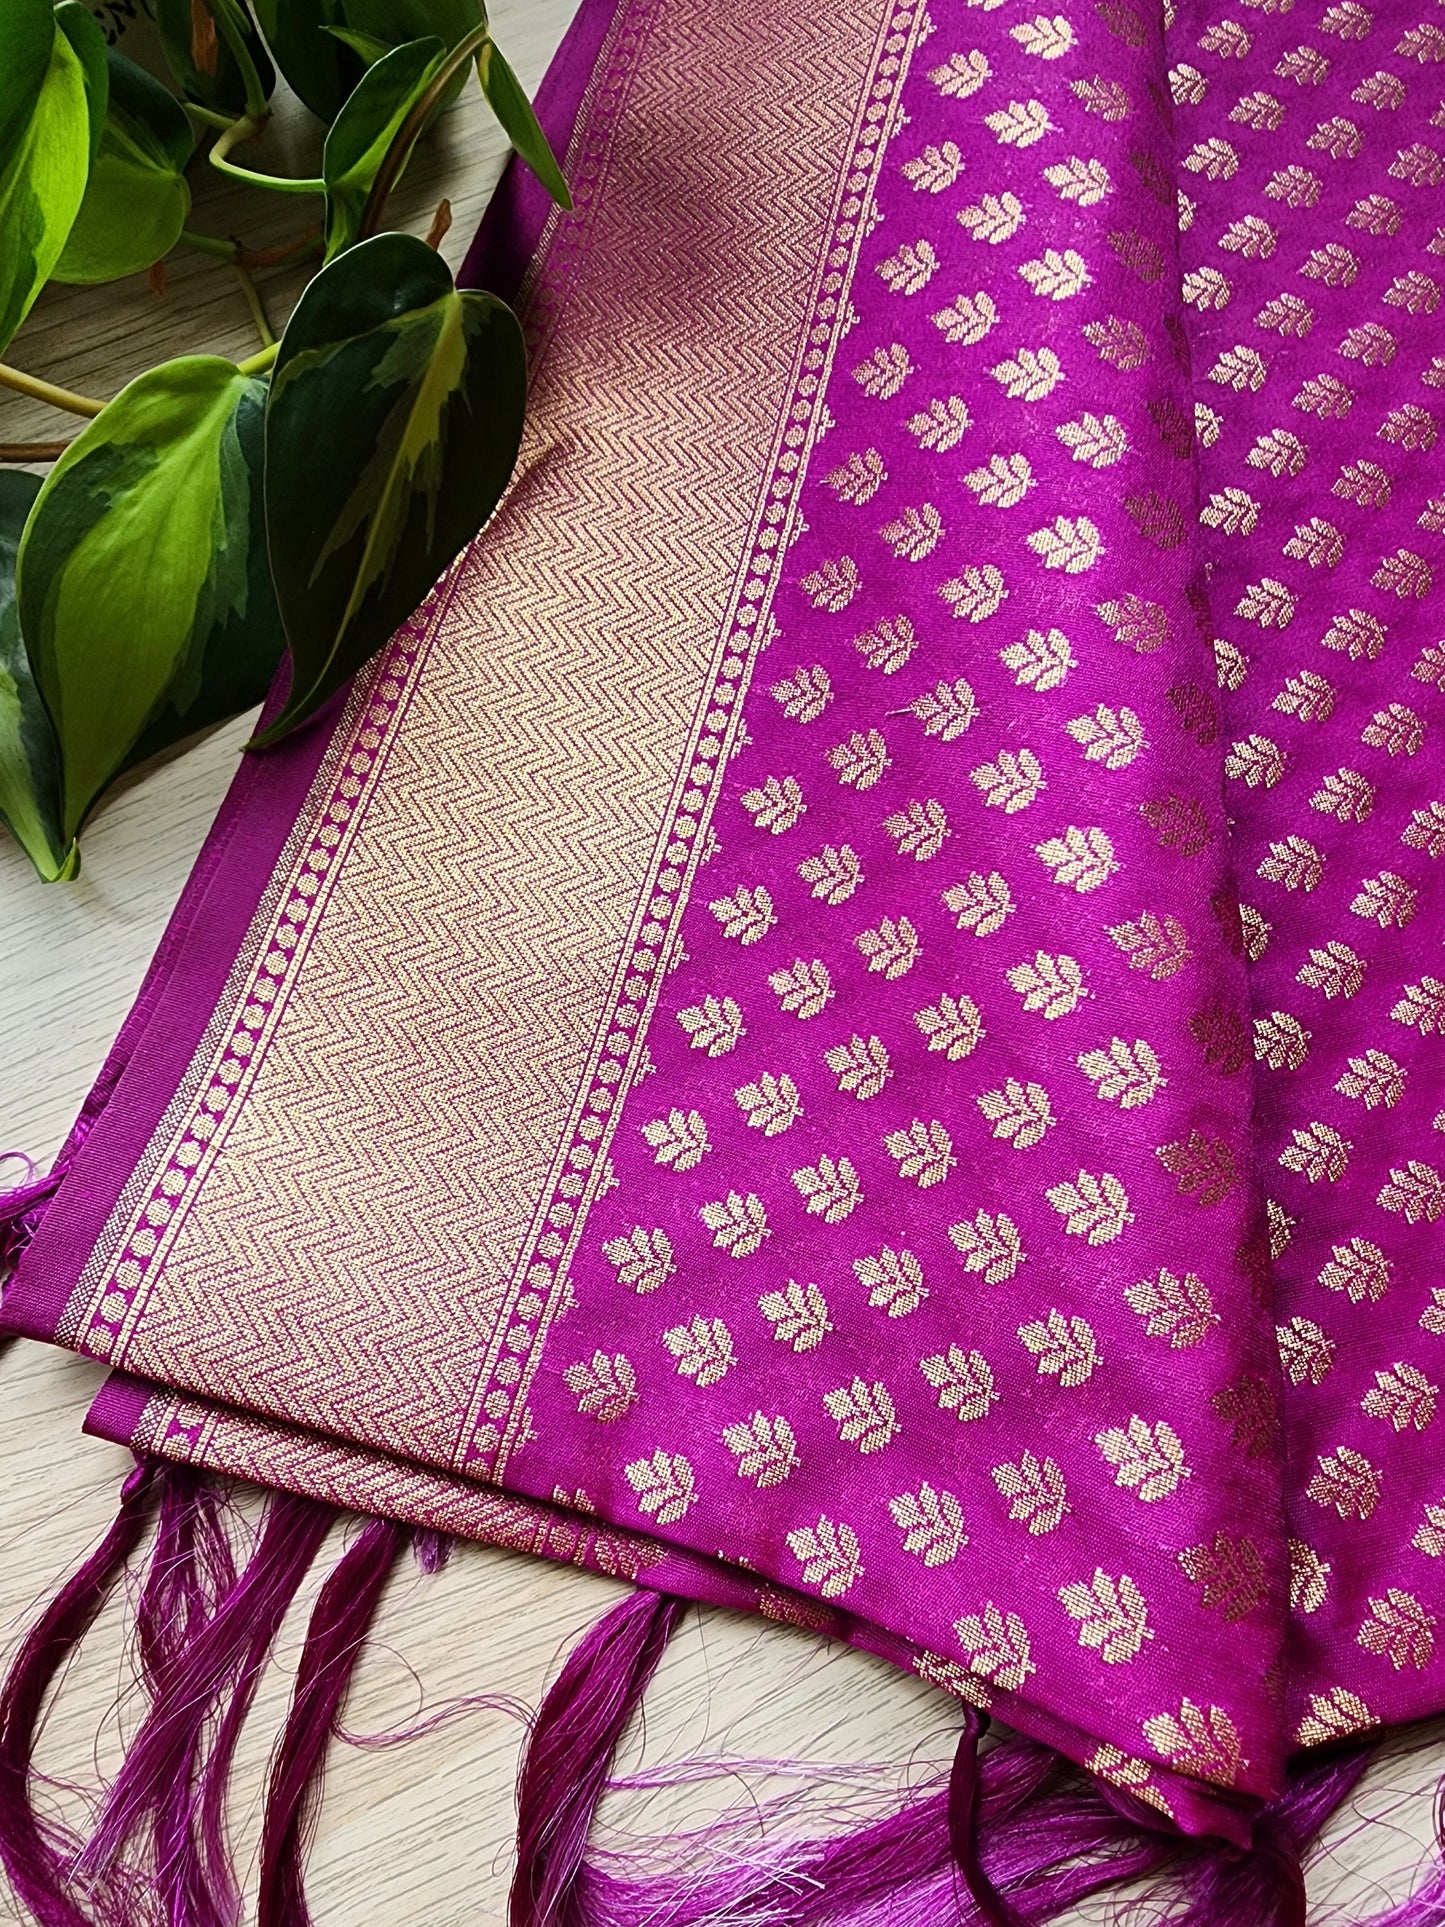 Banarasi Silk Purple Color Dupatta with gold handweaving, Indian traditional and Festive designer dupatta, luxurious soft Banarsi dupatta